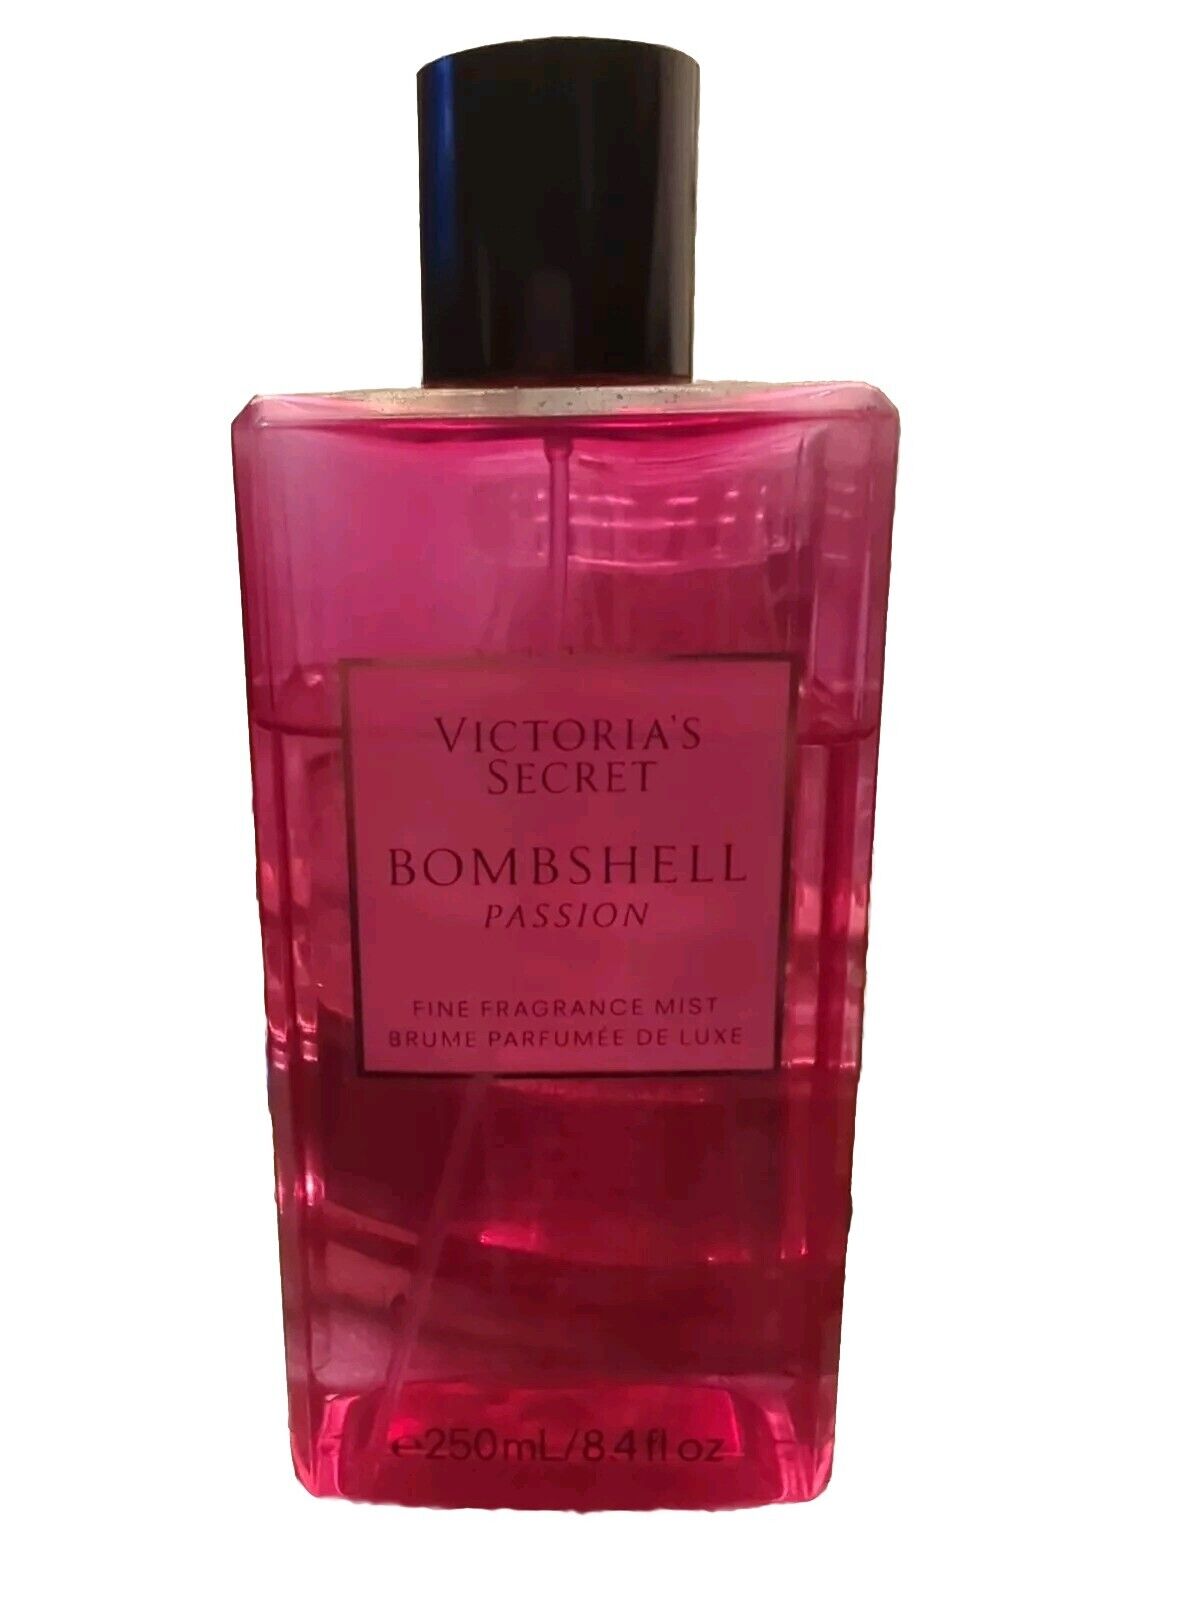 Victoria\'s Secret Bombshell Passion Fragrance Mist 8.4 fl oz